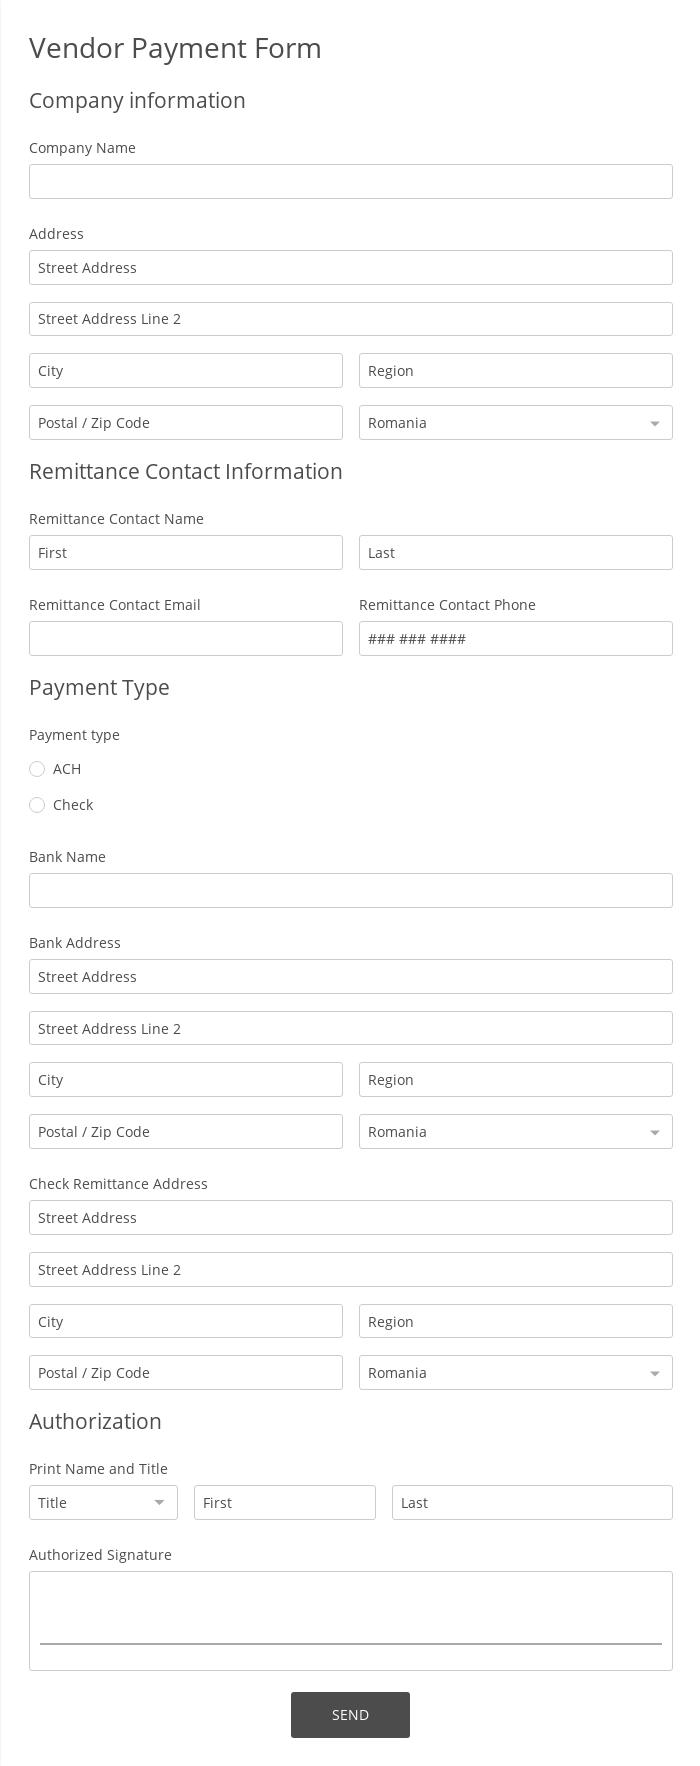 Vendor Payment Form